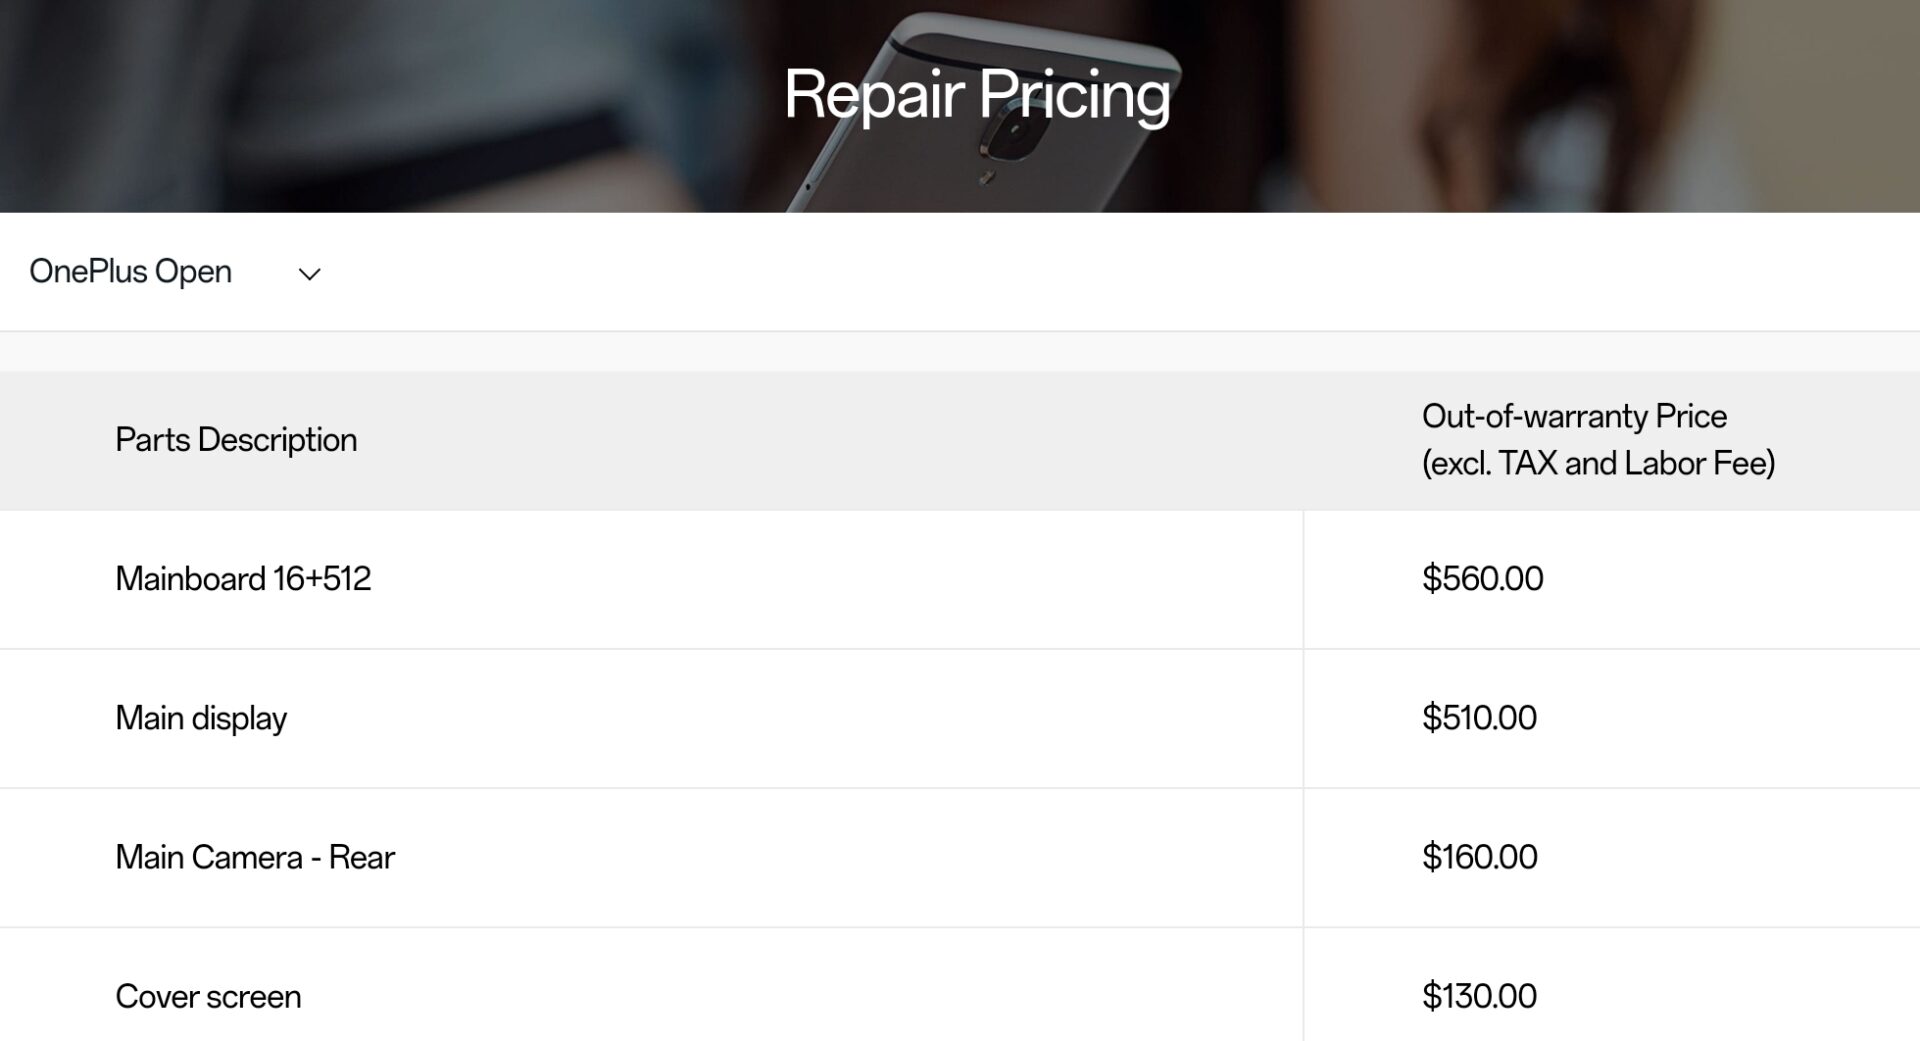 OnePlus Open screen cost